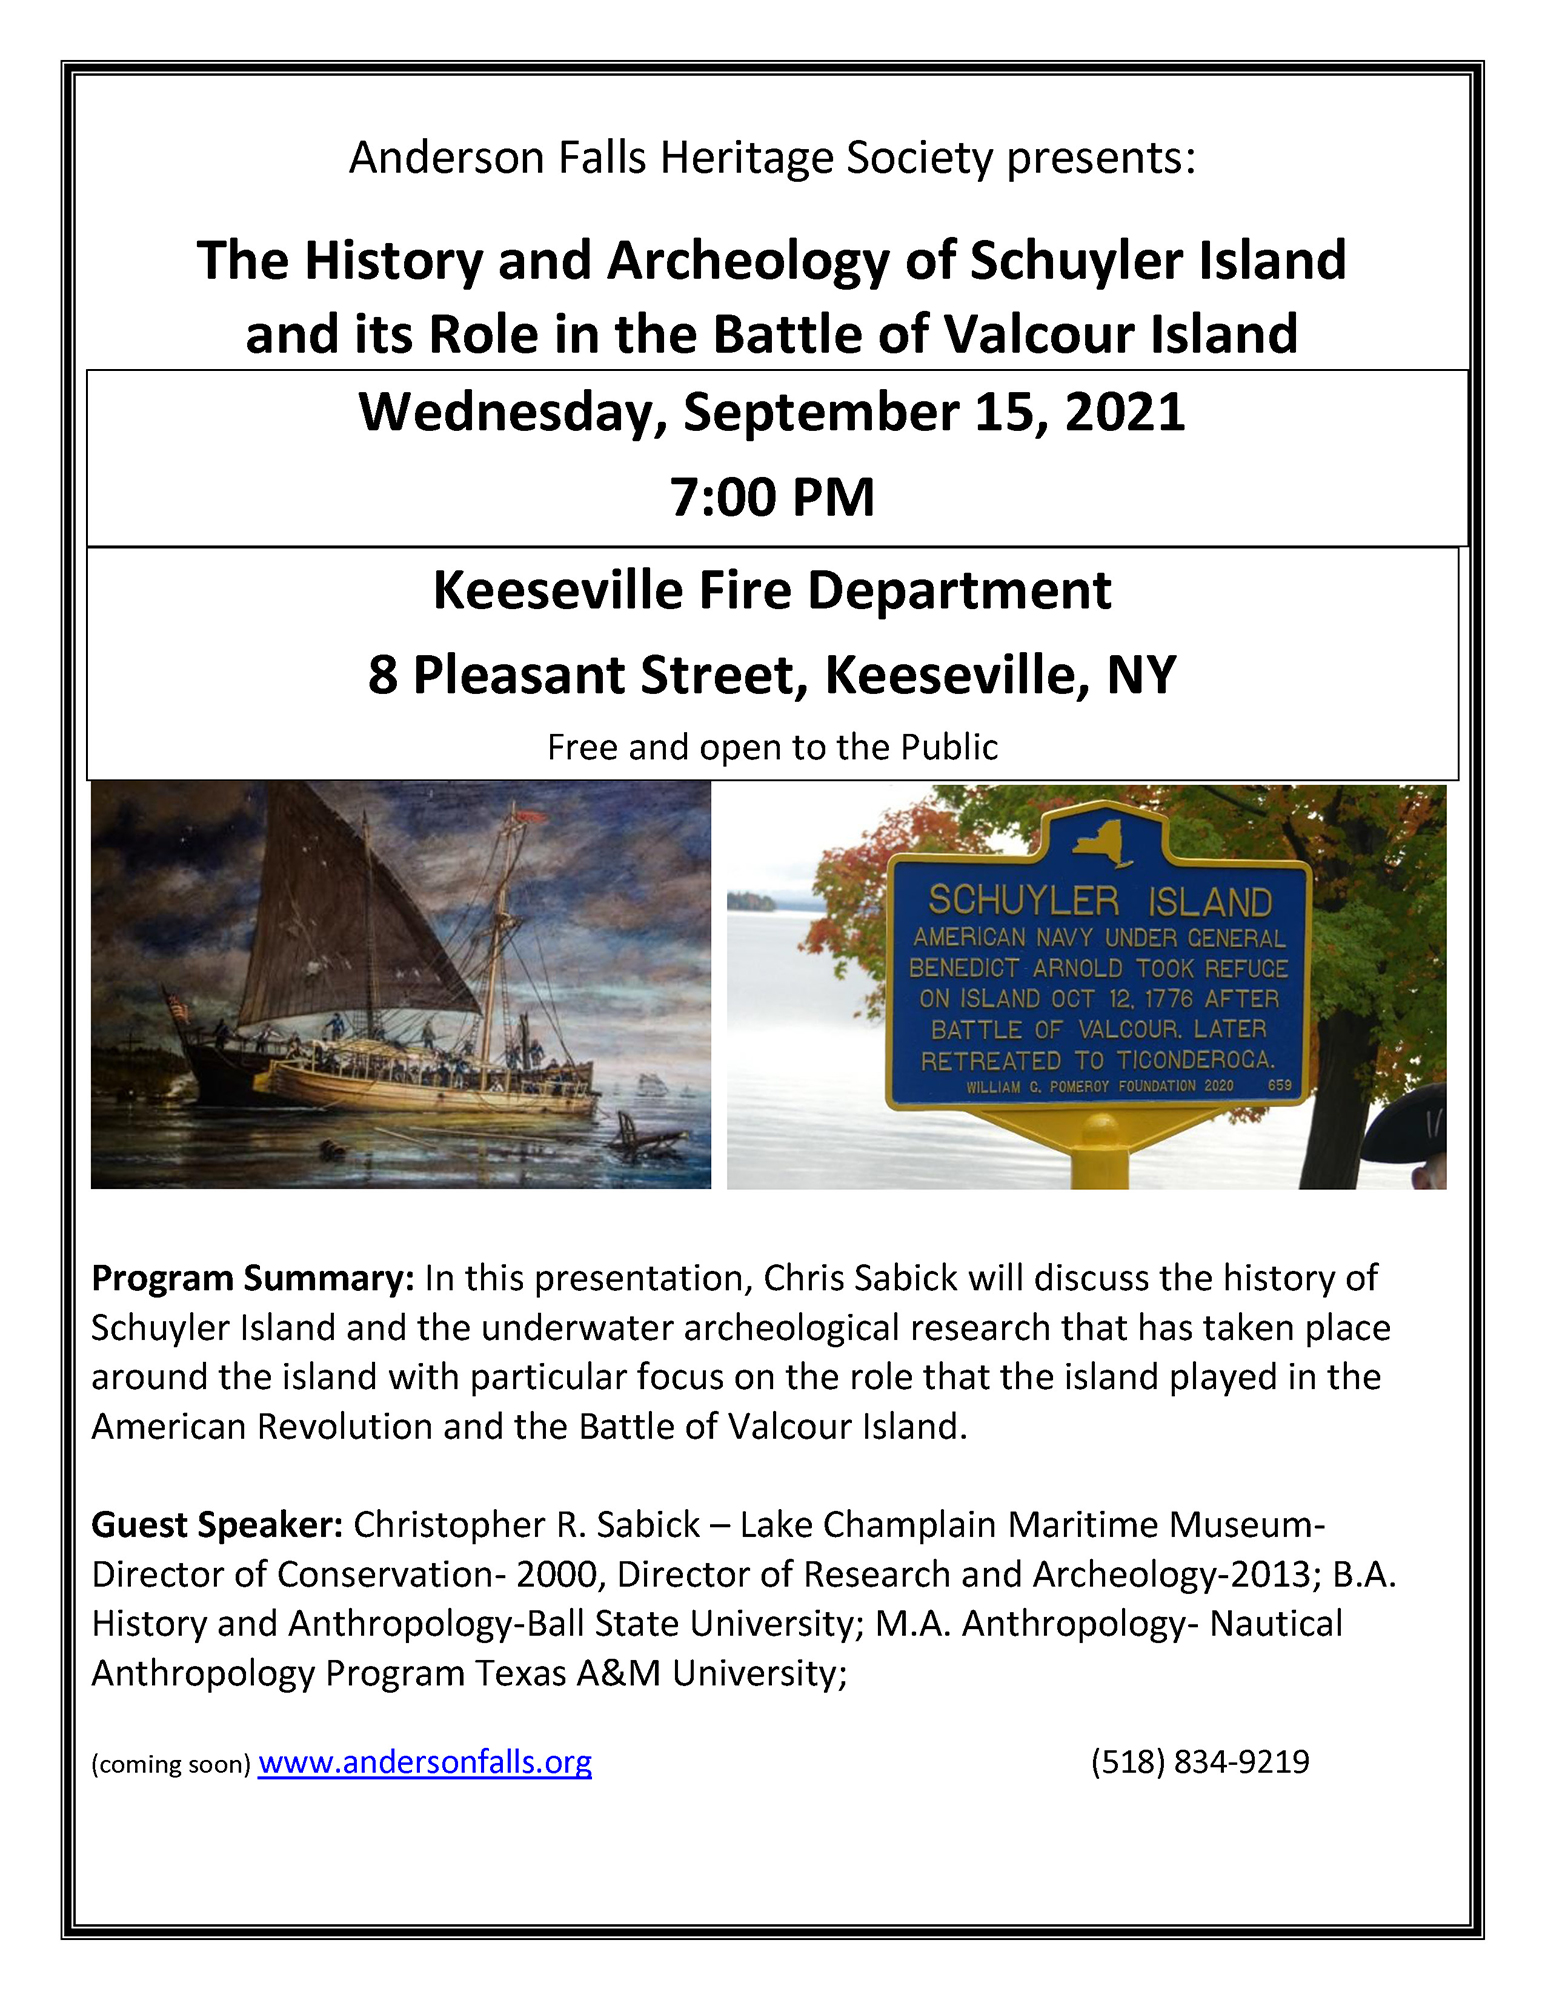 The History and Archeology of Schuyler Island program flyer